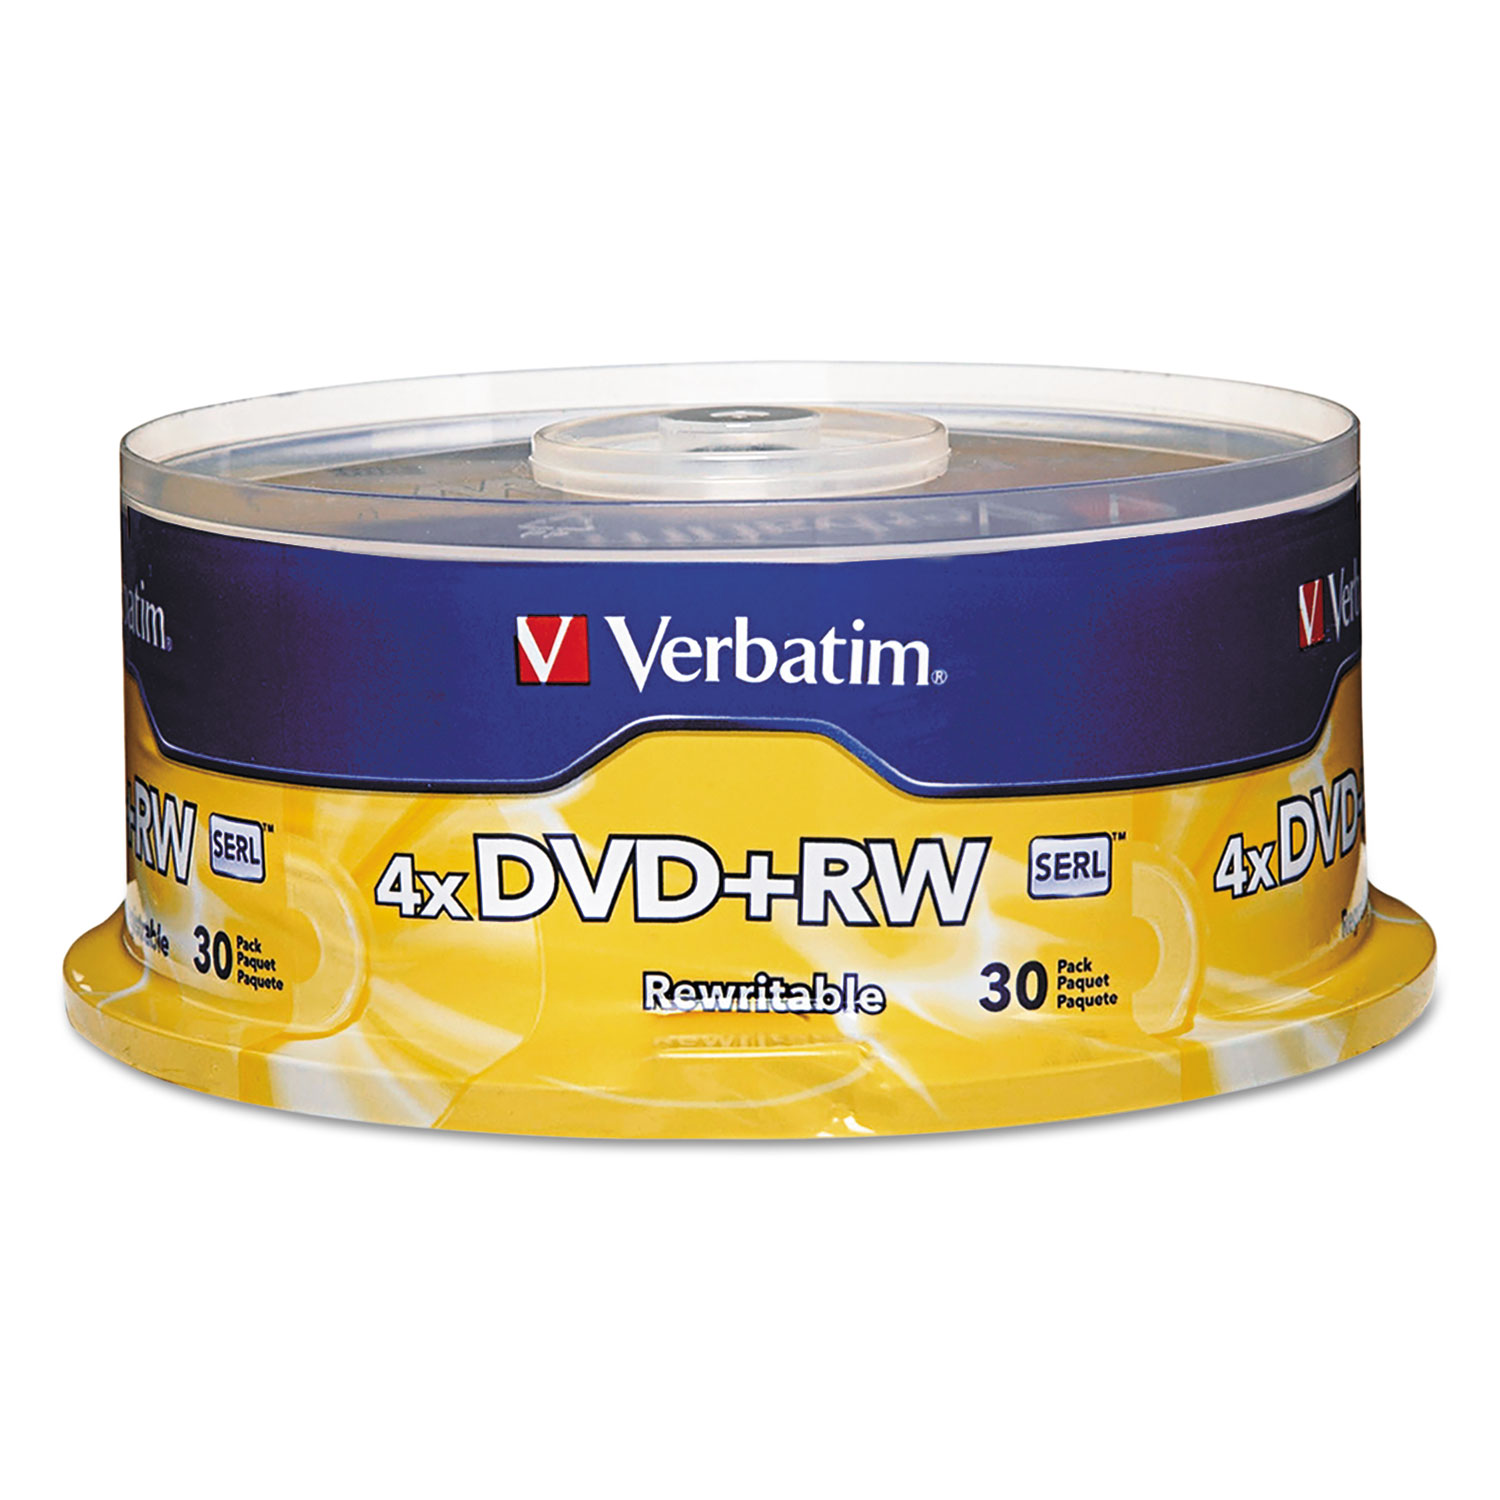 Verbatim DVD+RW 4.7GB 4X with Branded Surface - 10pk Jewel Case - 2 Hour Maximum Recording Time - image 3 of 3